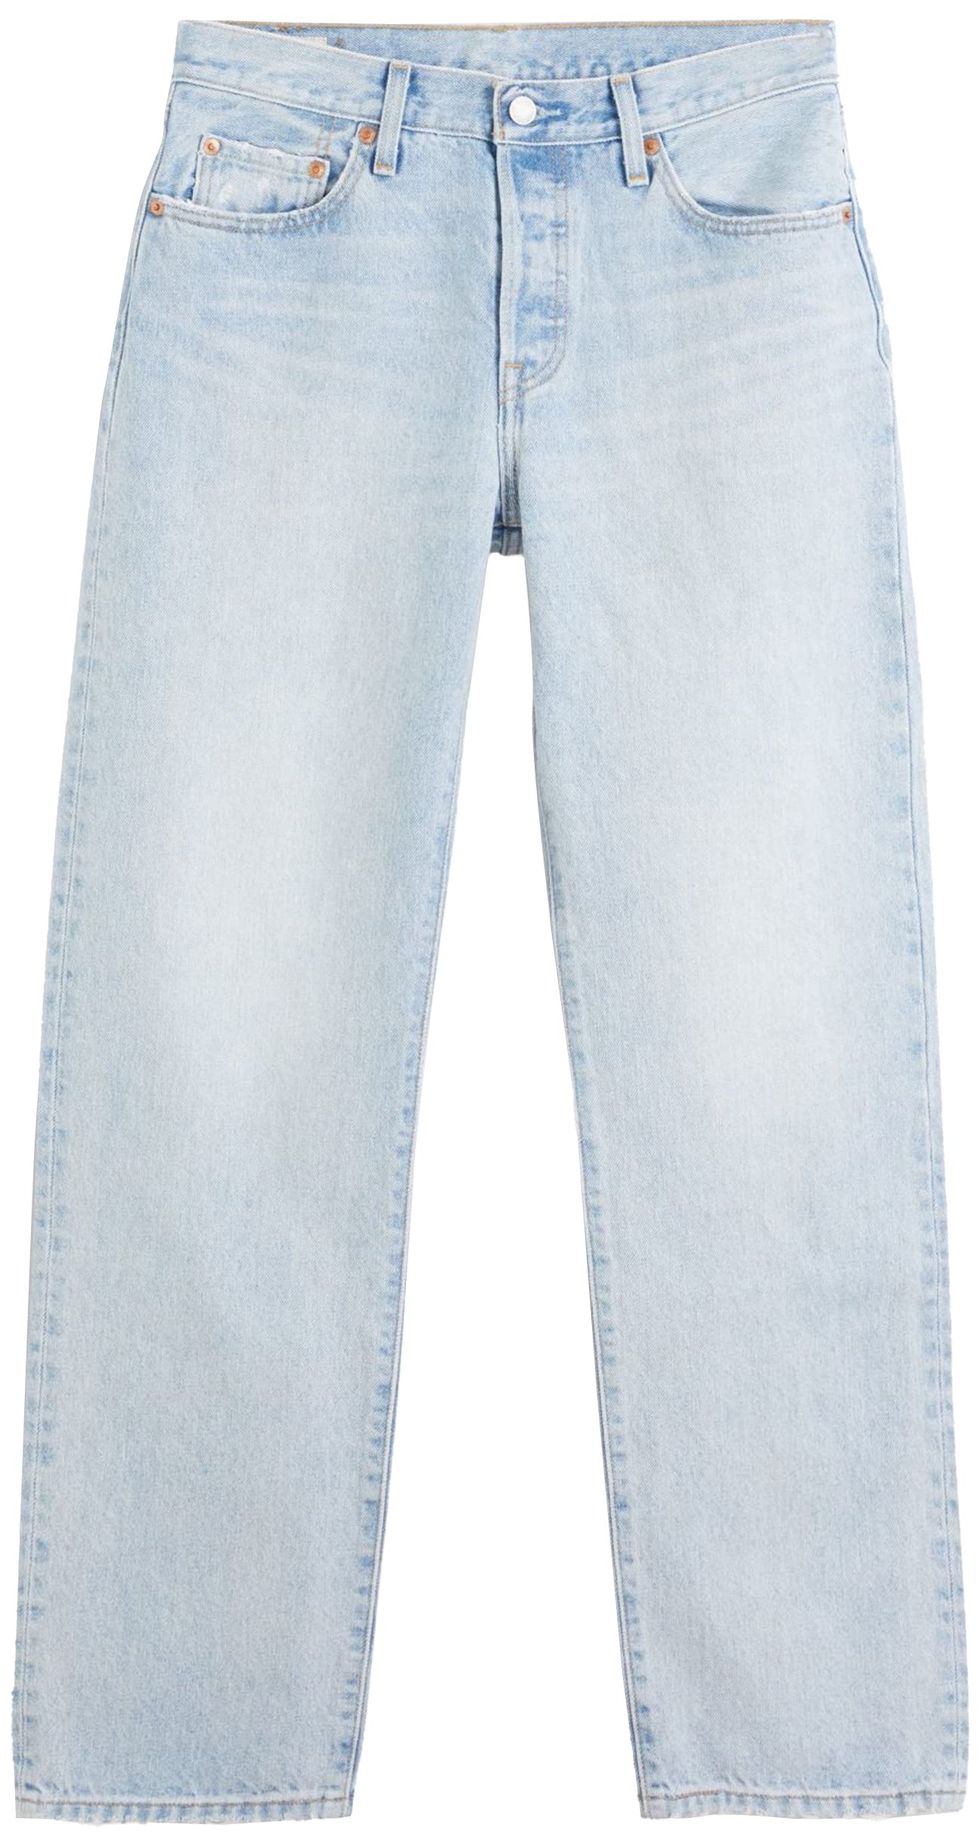 Jeans de Mujer 501 90's